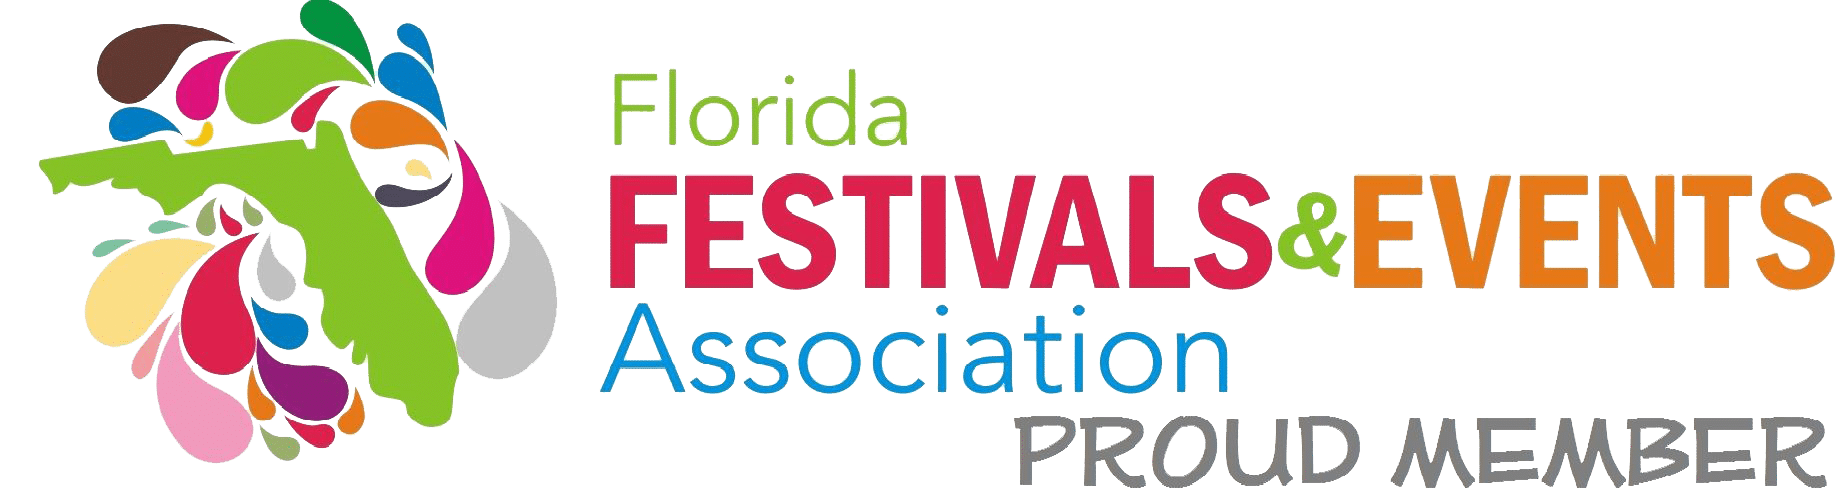 Member of Florida Festivals and Events Association logo badge